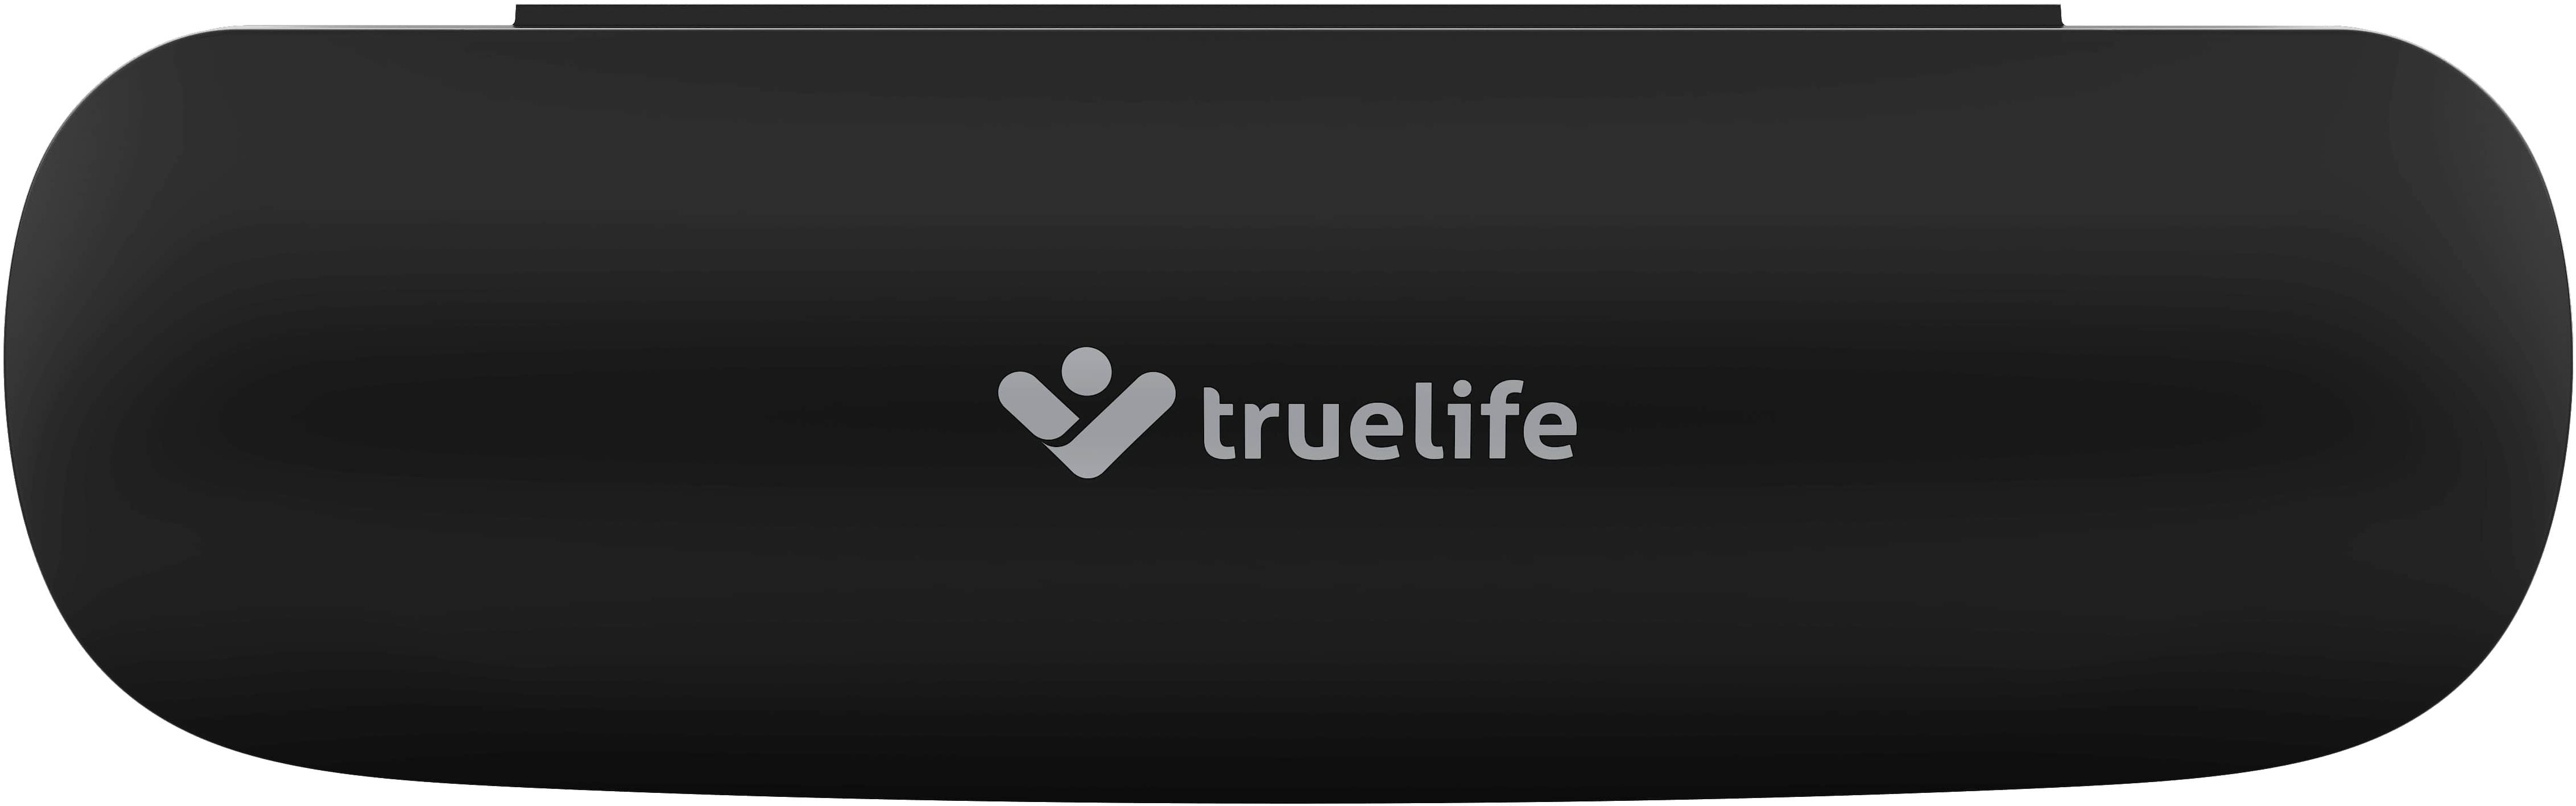 TrueLife SonicBrush Compact Travel Case Black